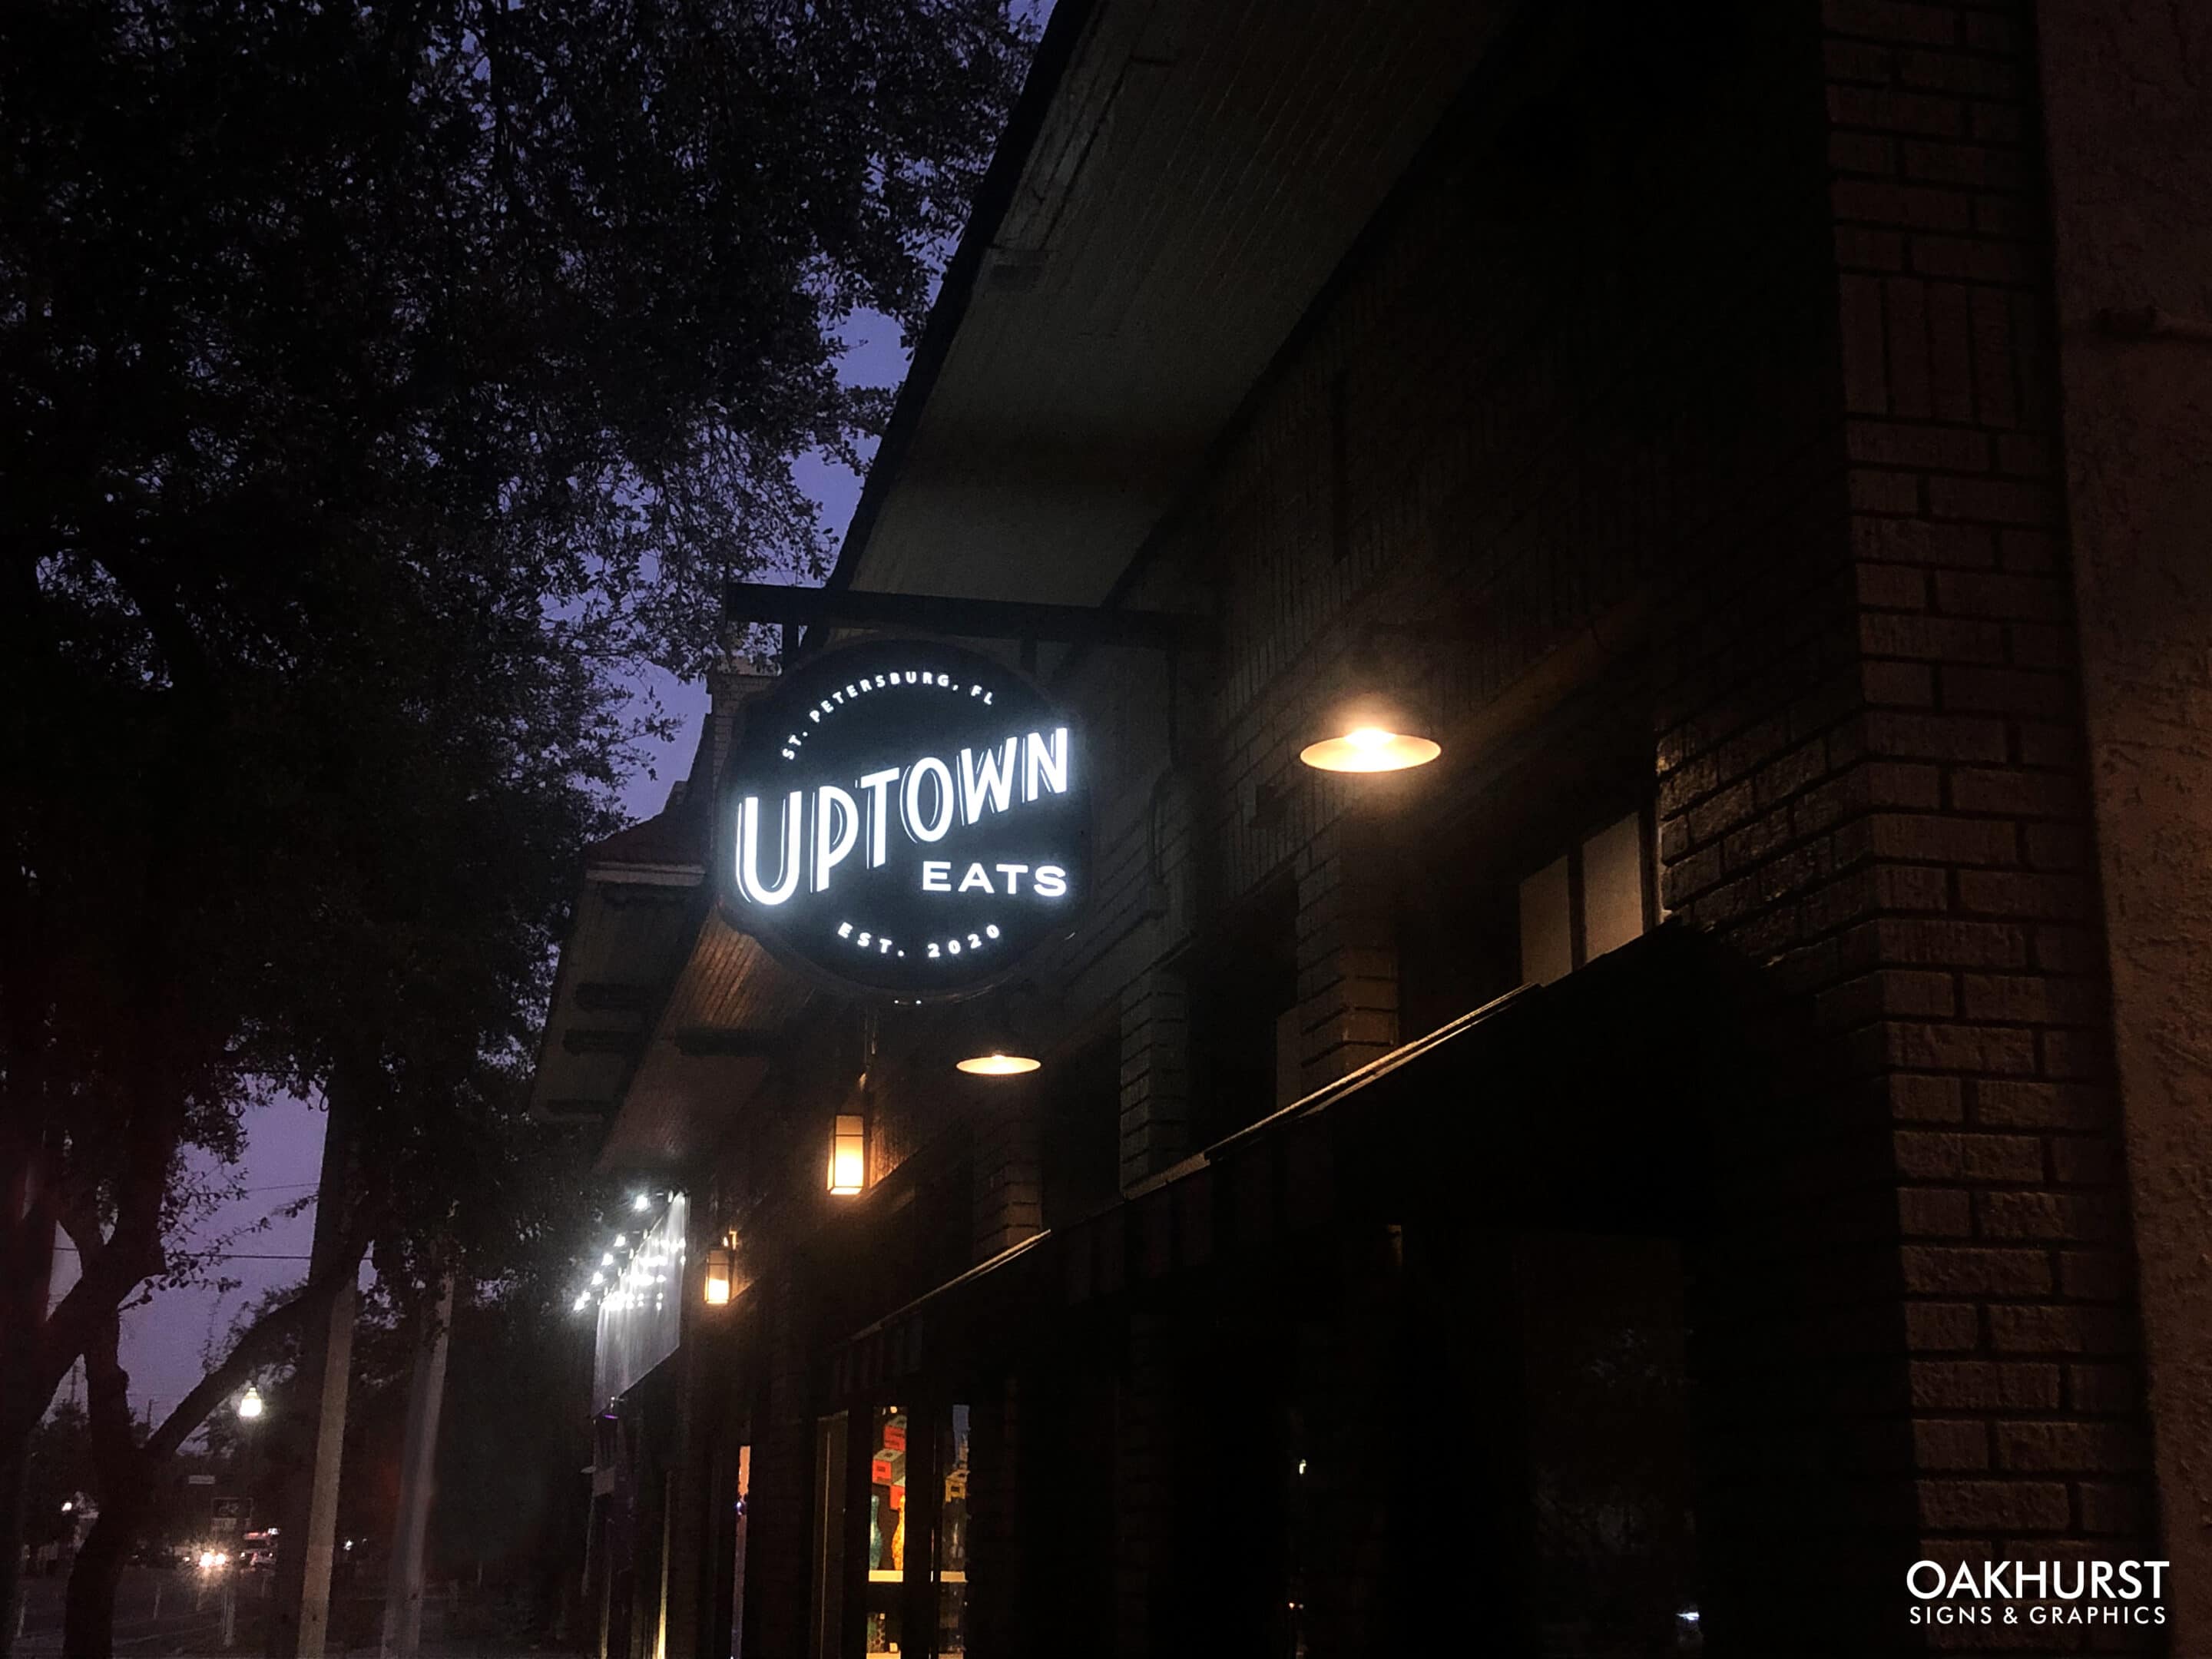 Uptown Eats signage illuminated at night